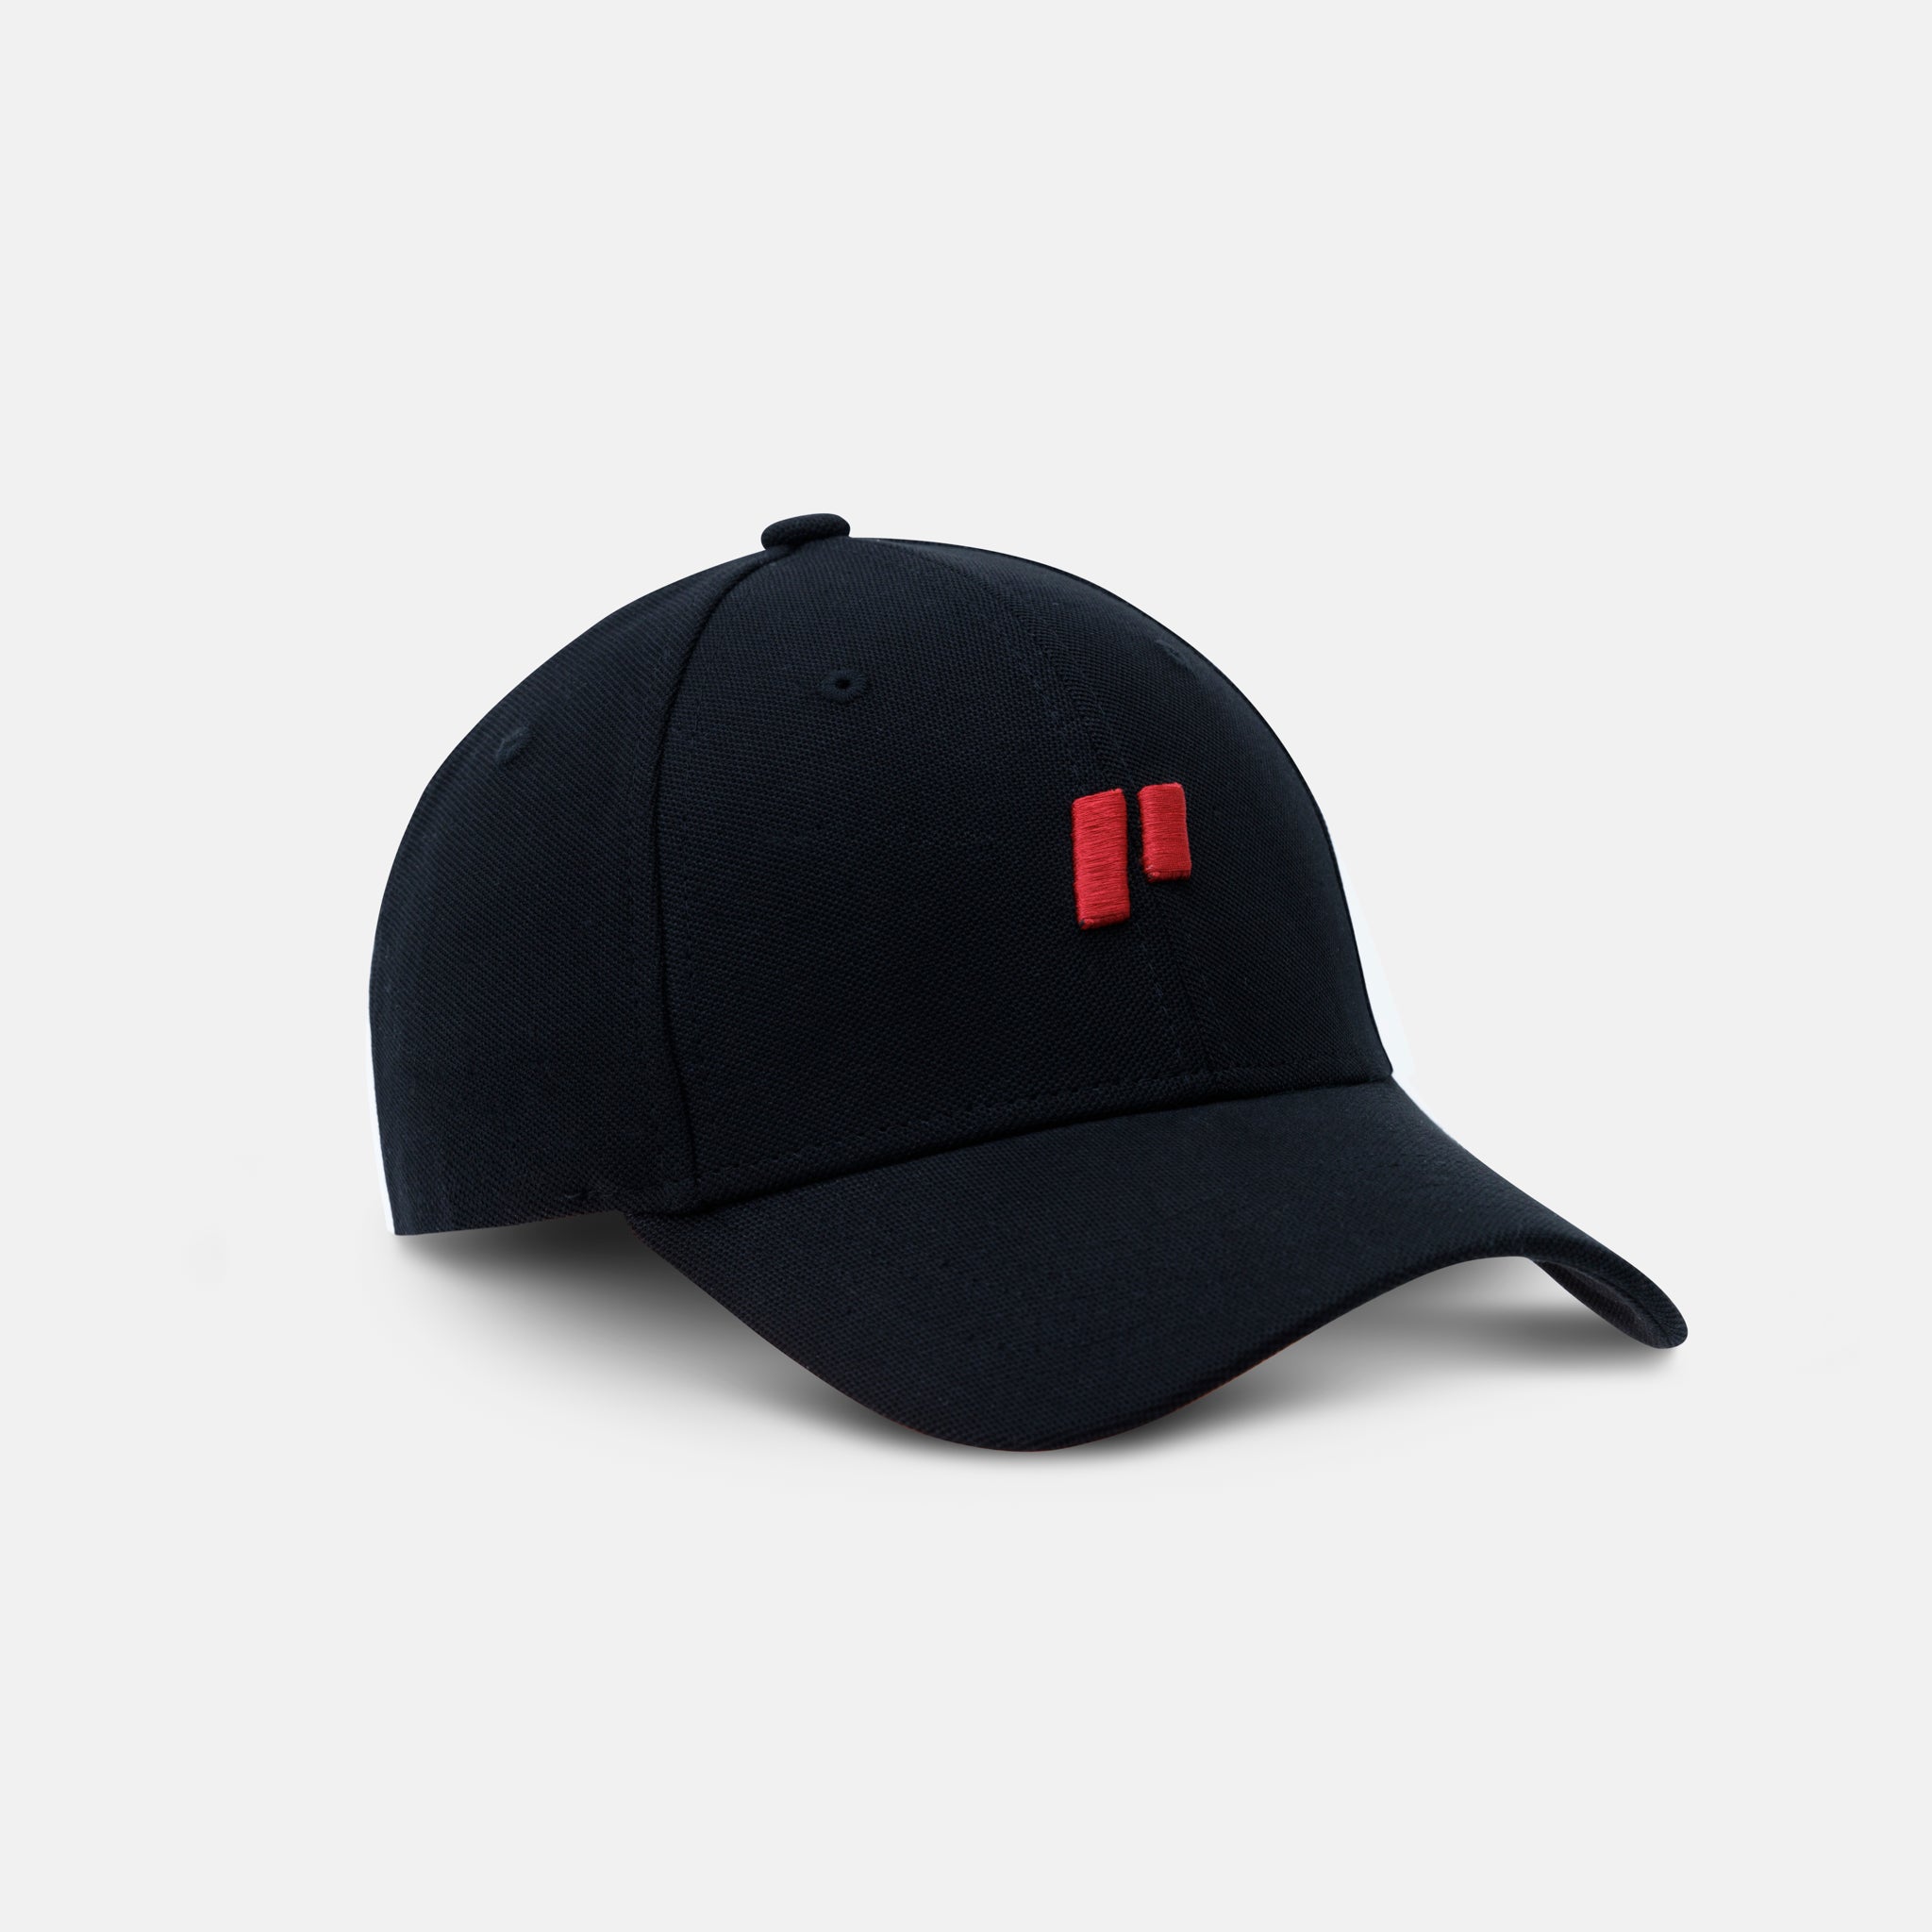 RS Hat - Black